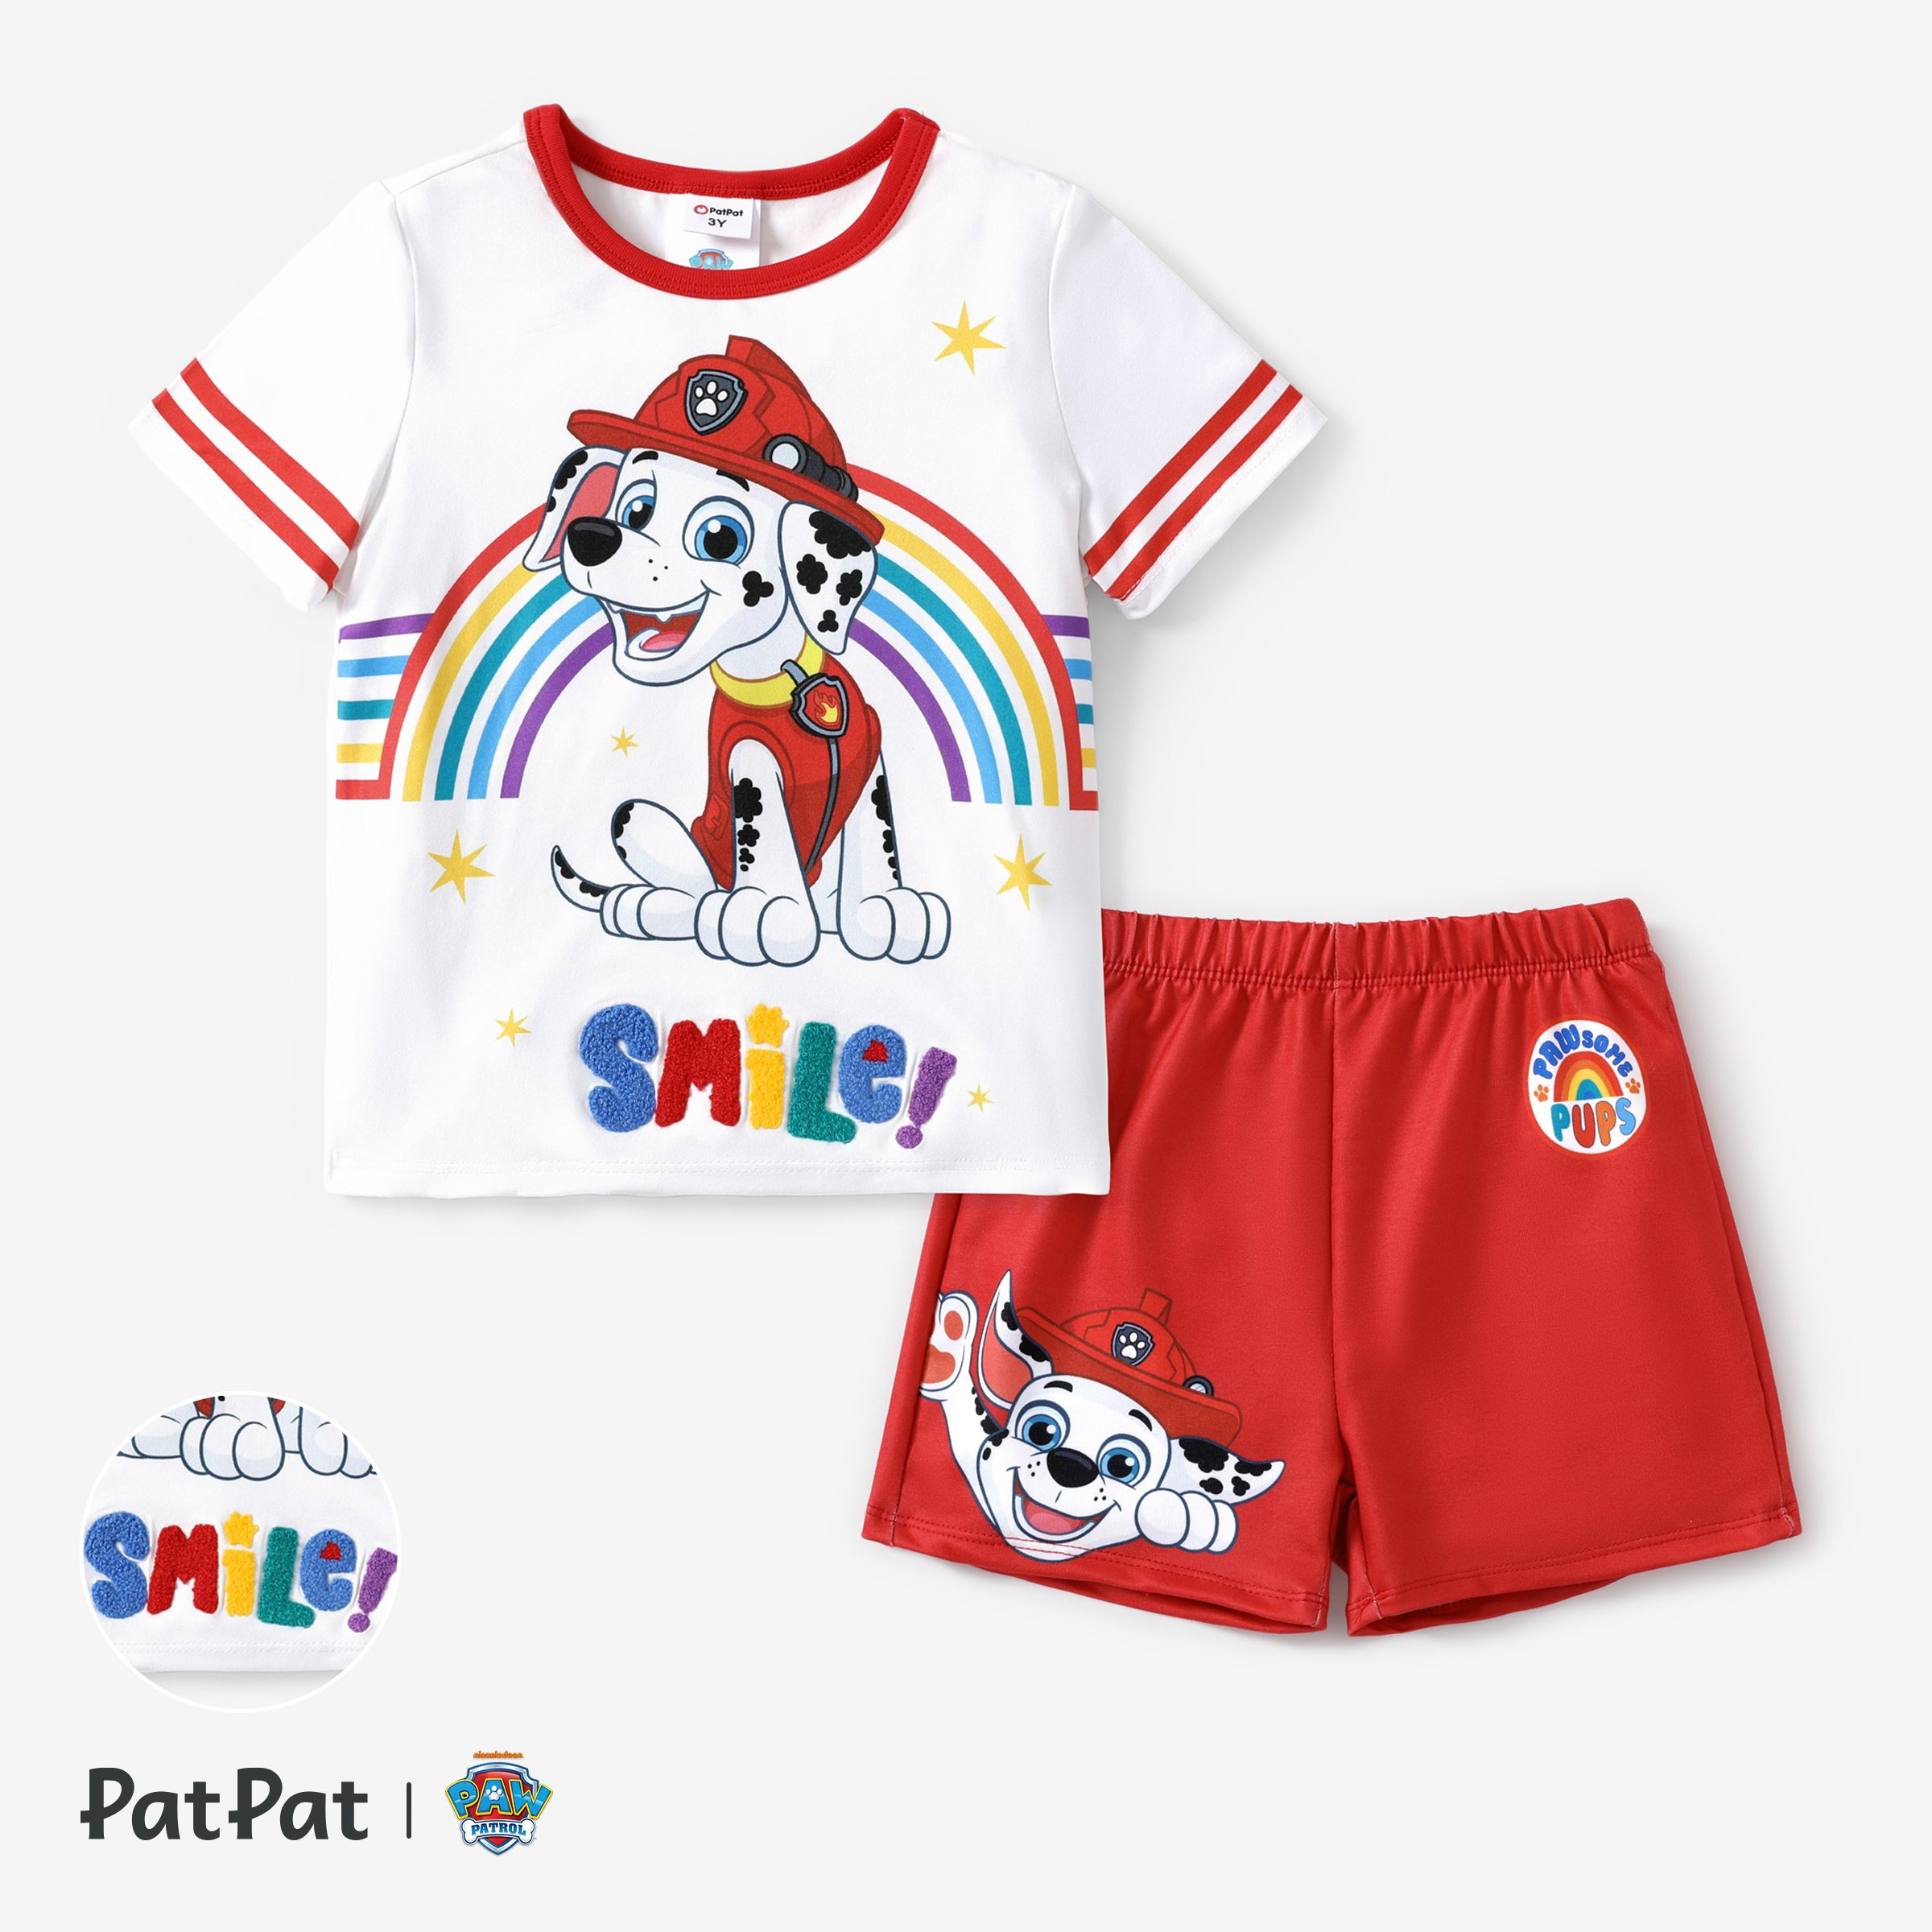 

PAW Patrol Toddler Girls/Boys 2pcs Character Rainbow Print T-shirt with Shorts Sporty Set